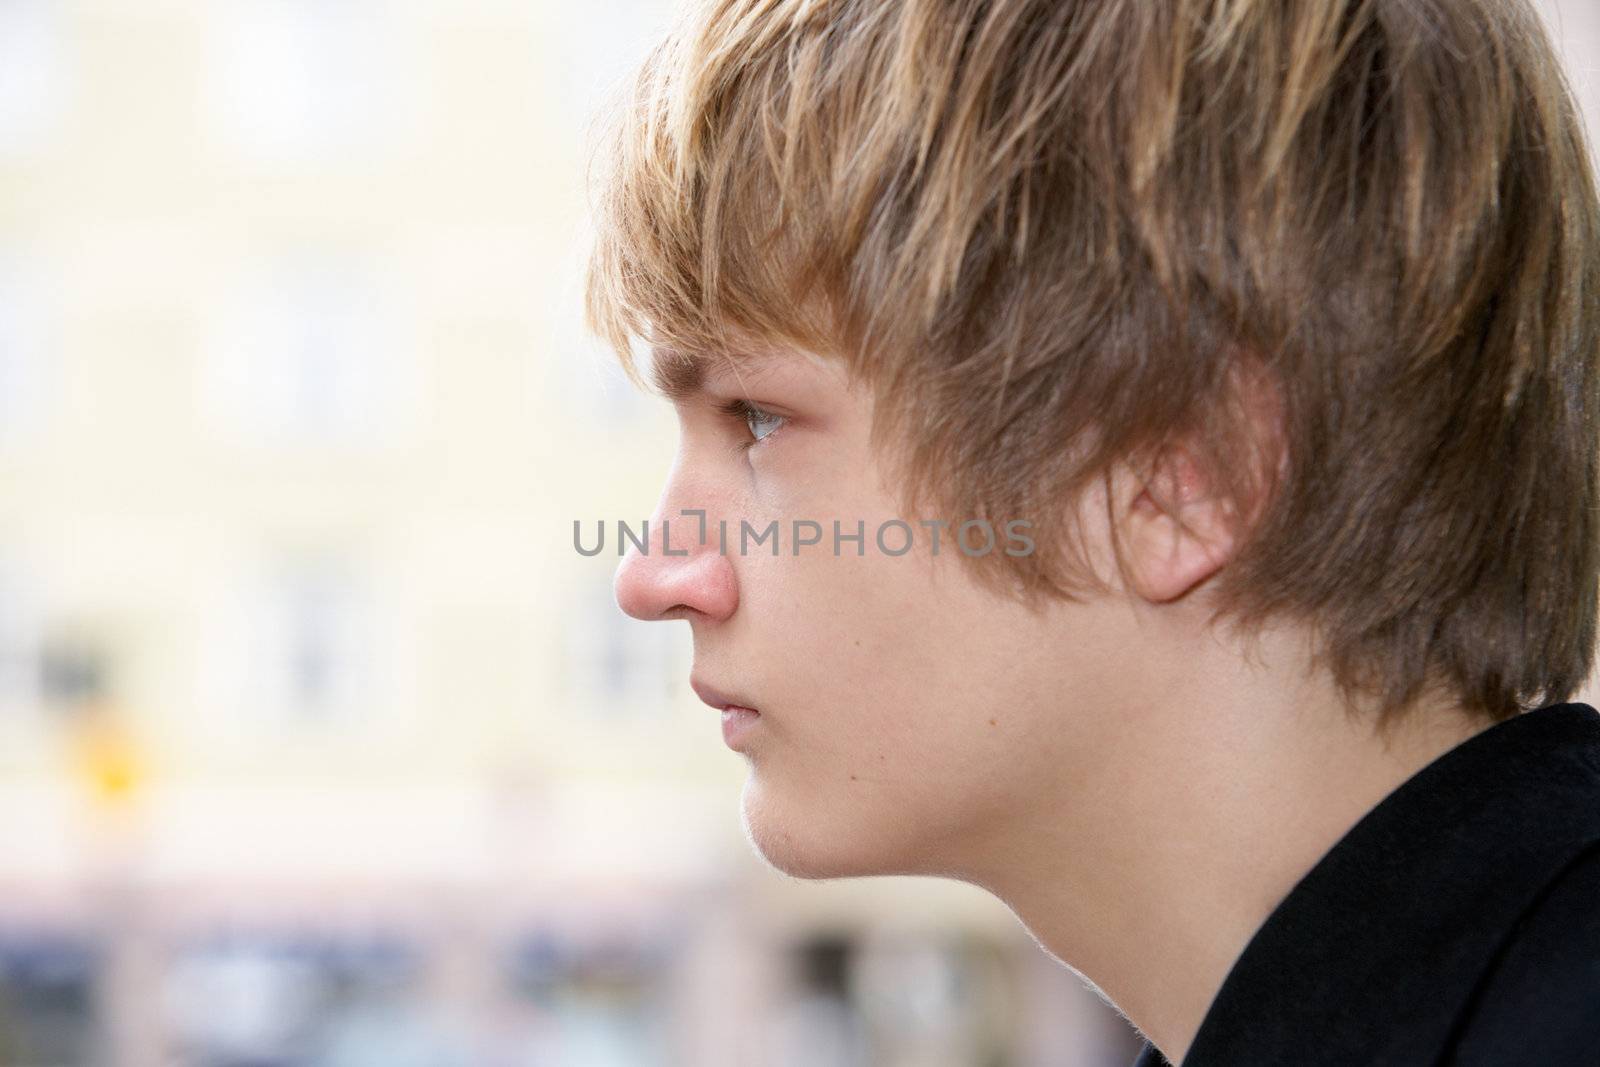 Teenage boy side profile, close-up headshot